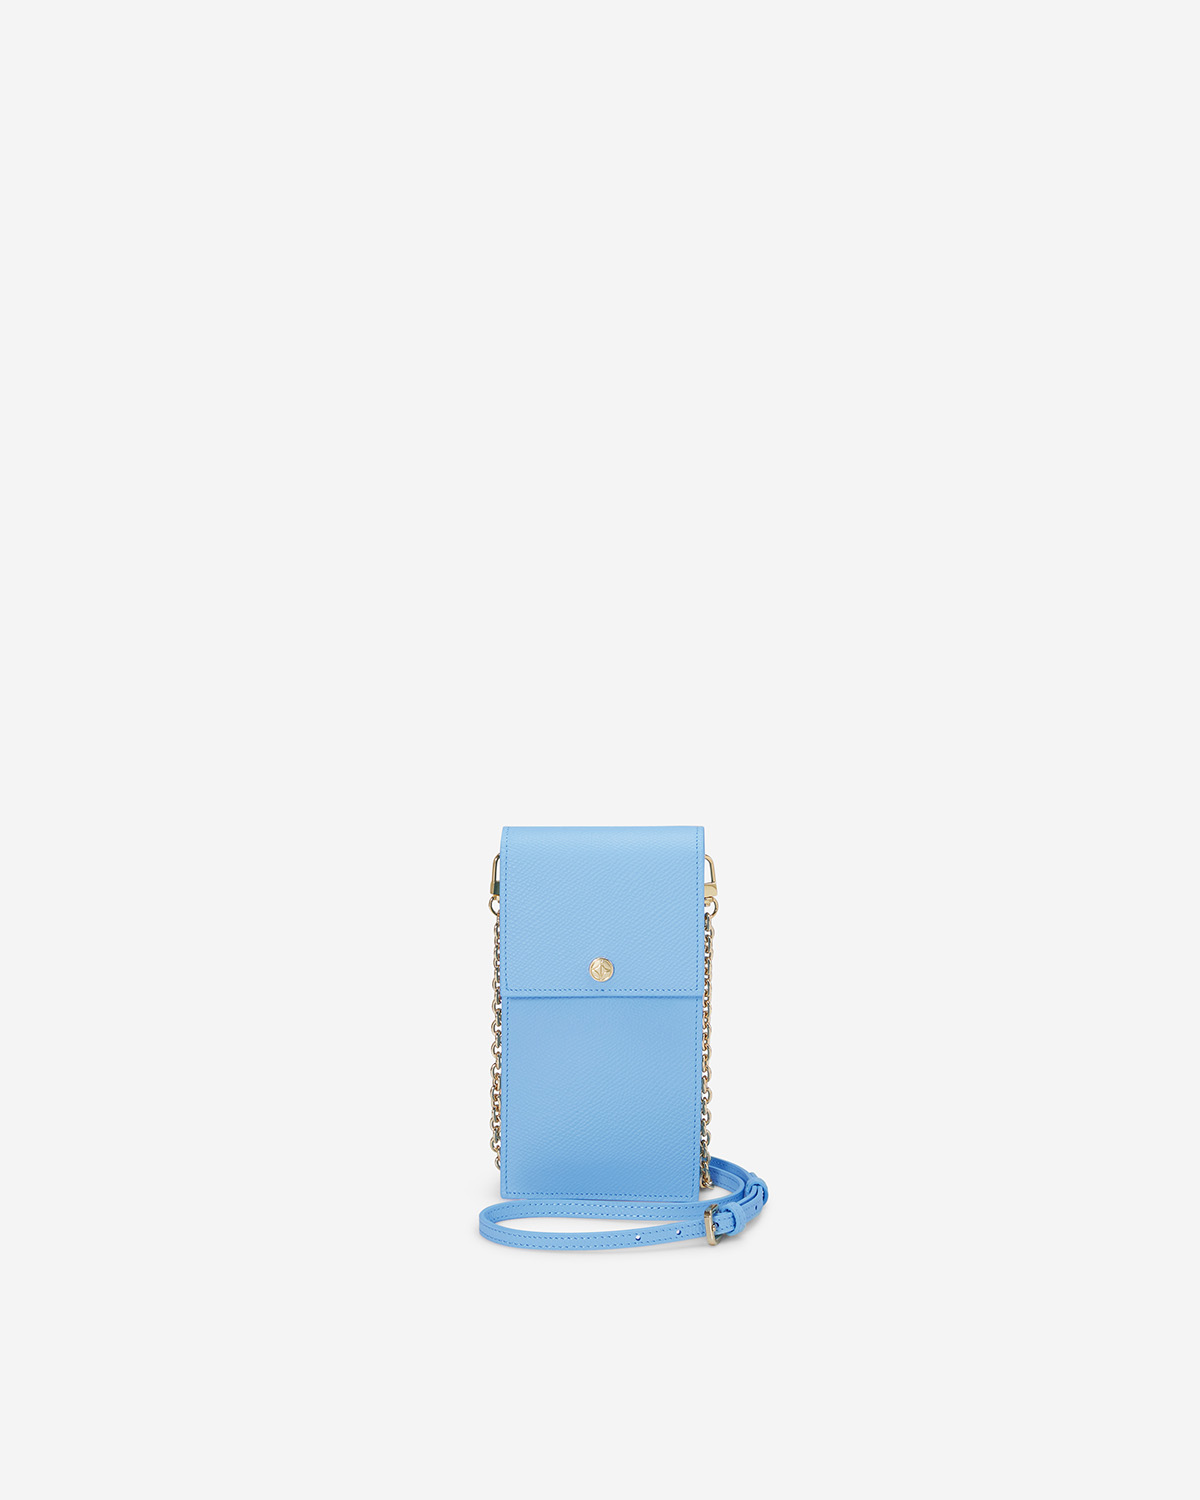 VERA Emily Phone Pouch with Leather Gold Chain in Serene Blue กระเป๋าใส่โทรศัพท์หนังแท้ พร้อมฟังก์ชั่นกระเป๋าสตางค์ มาพร้อมสายสะพายโซ่หนังถอดได้ สีฟ้า